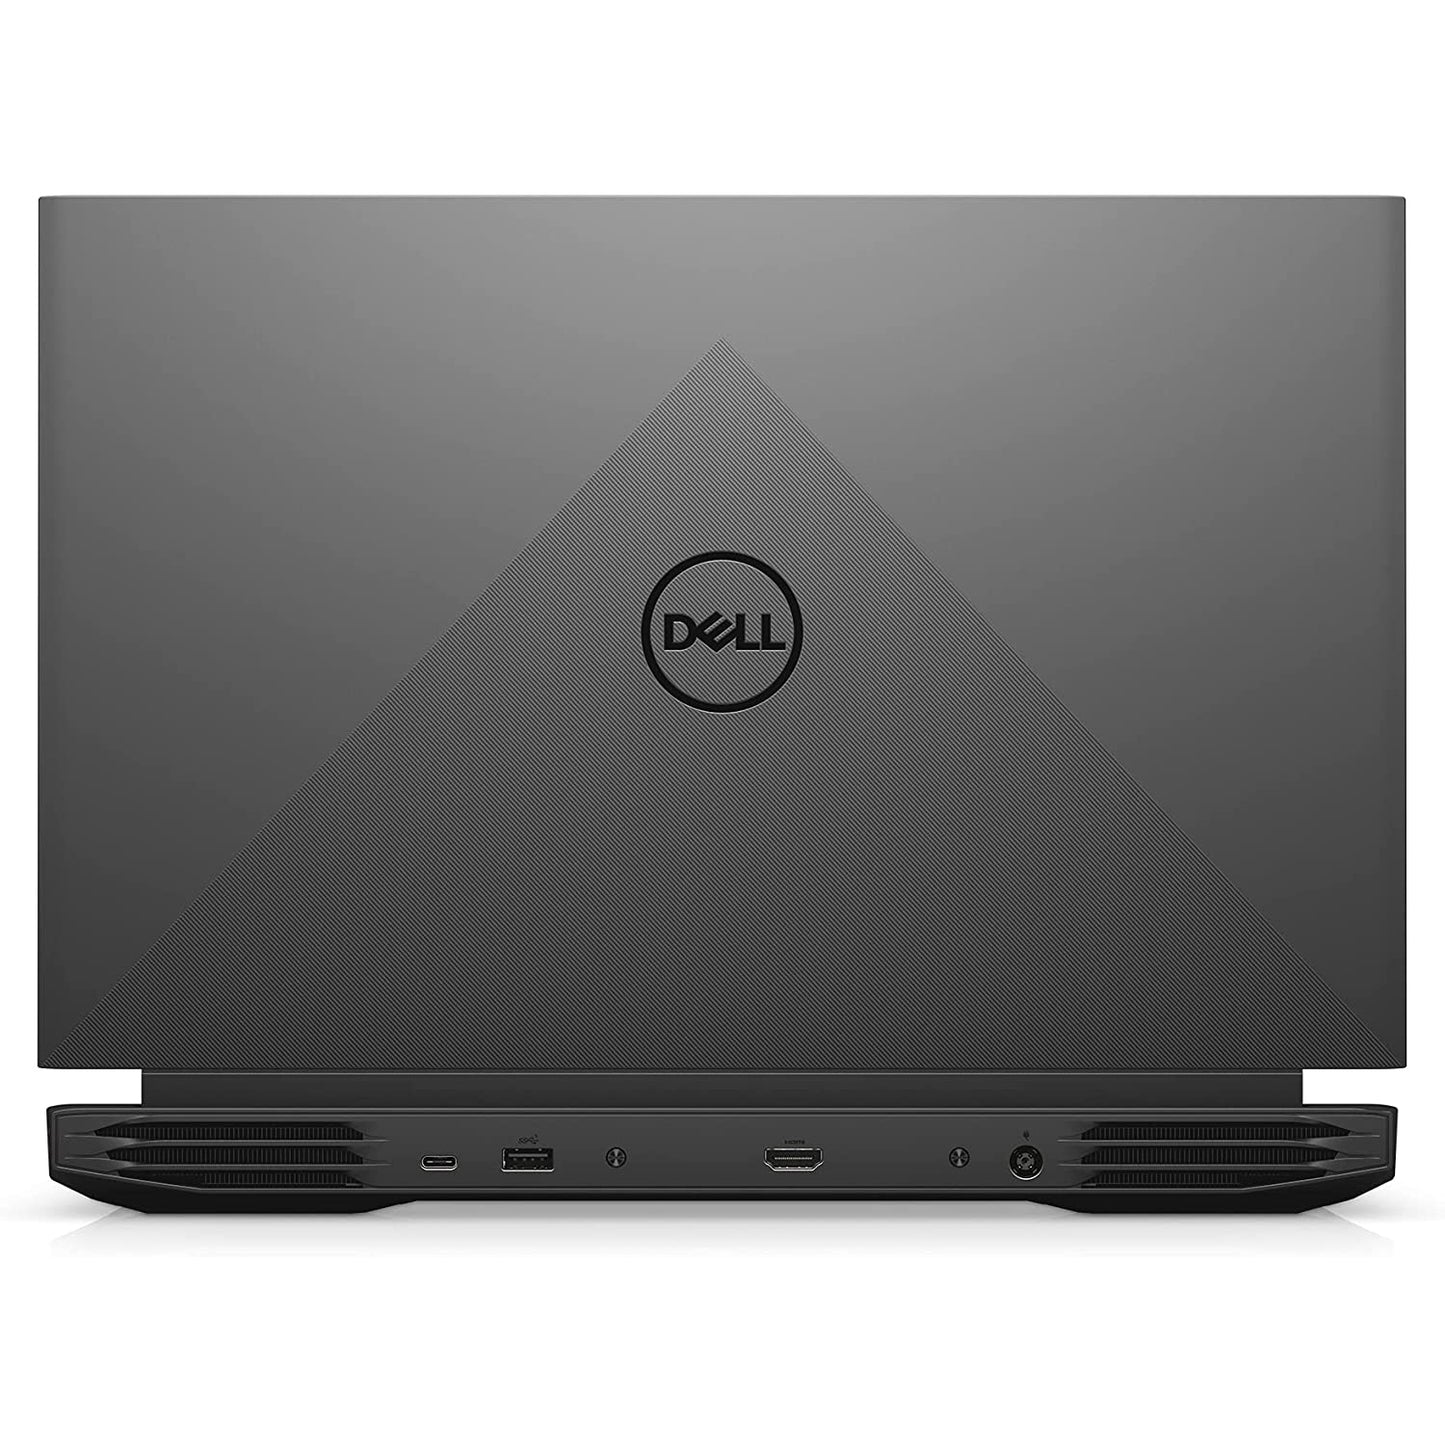 DELL G15 5511 Gaming Laptop - Intel Core I7-11800H, 16GB, 512GB SSD, NVIDIA RTX 3060 6GB, 15.6" FHD 120Hz, Dos